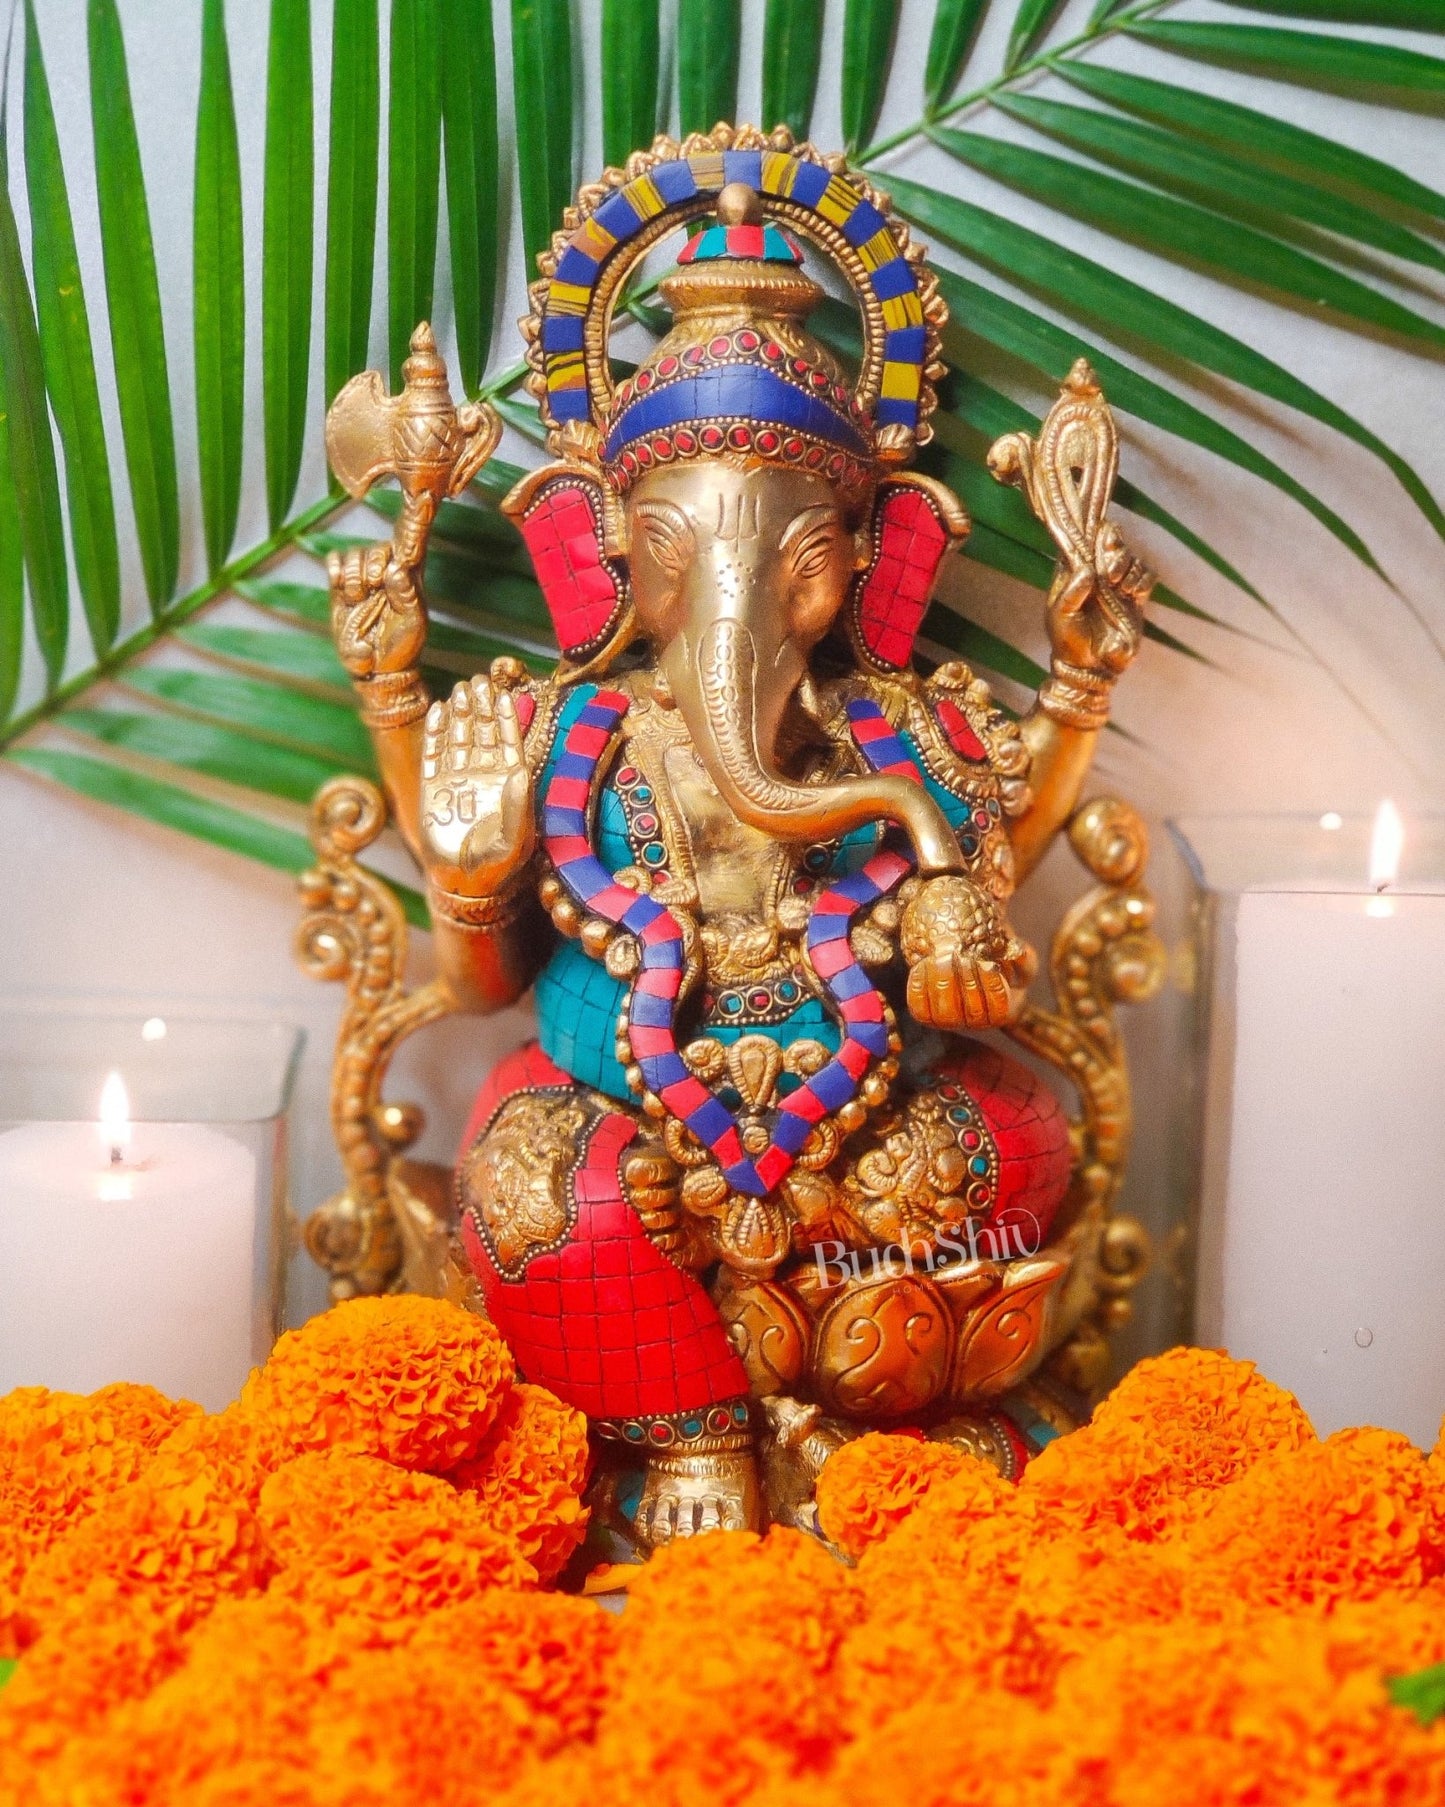 Ganesha on a lotus base large brass idol 12 inches with stonework - Budhshiv.com